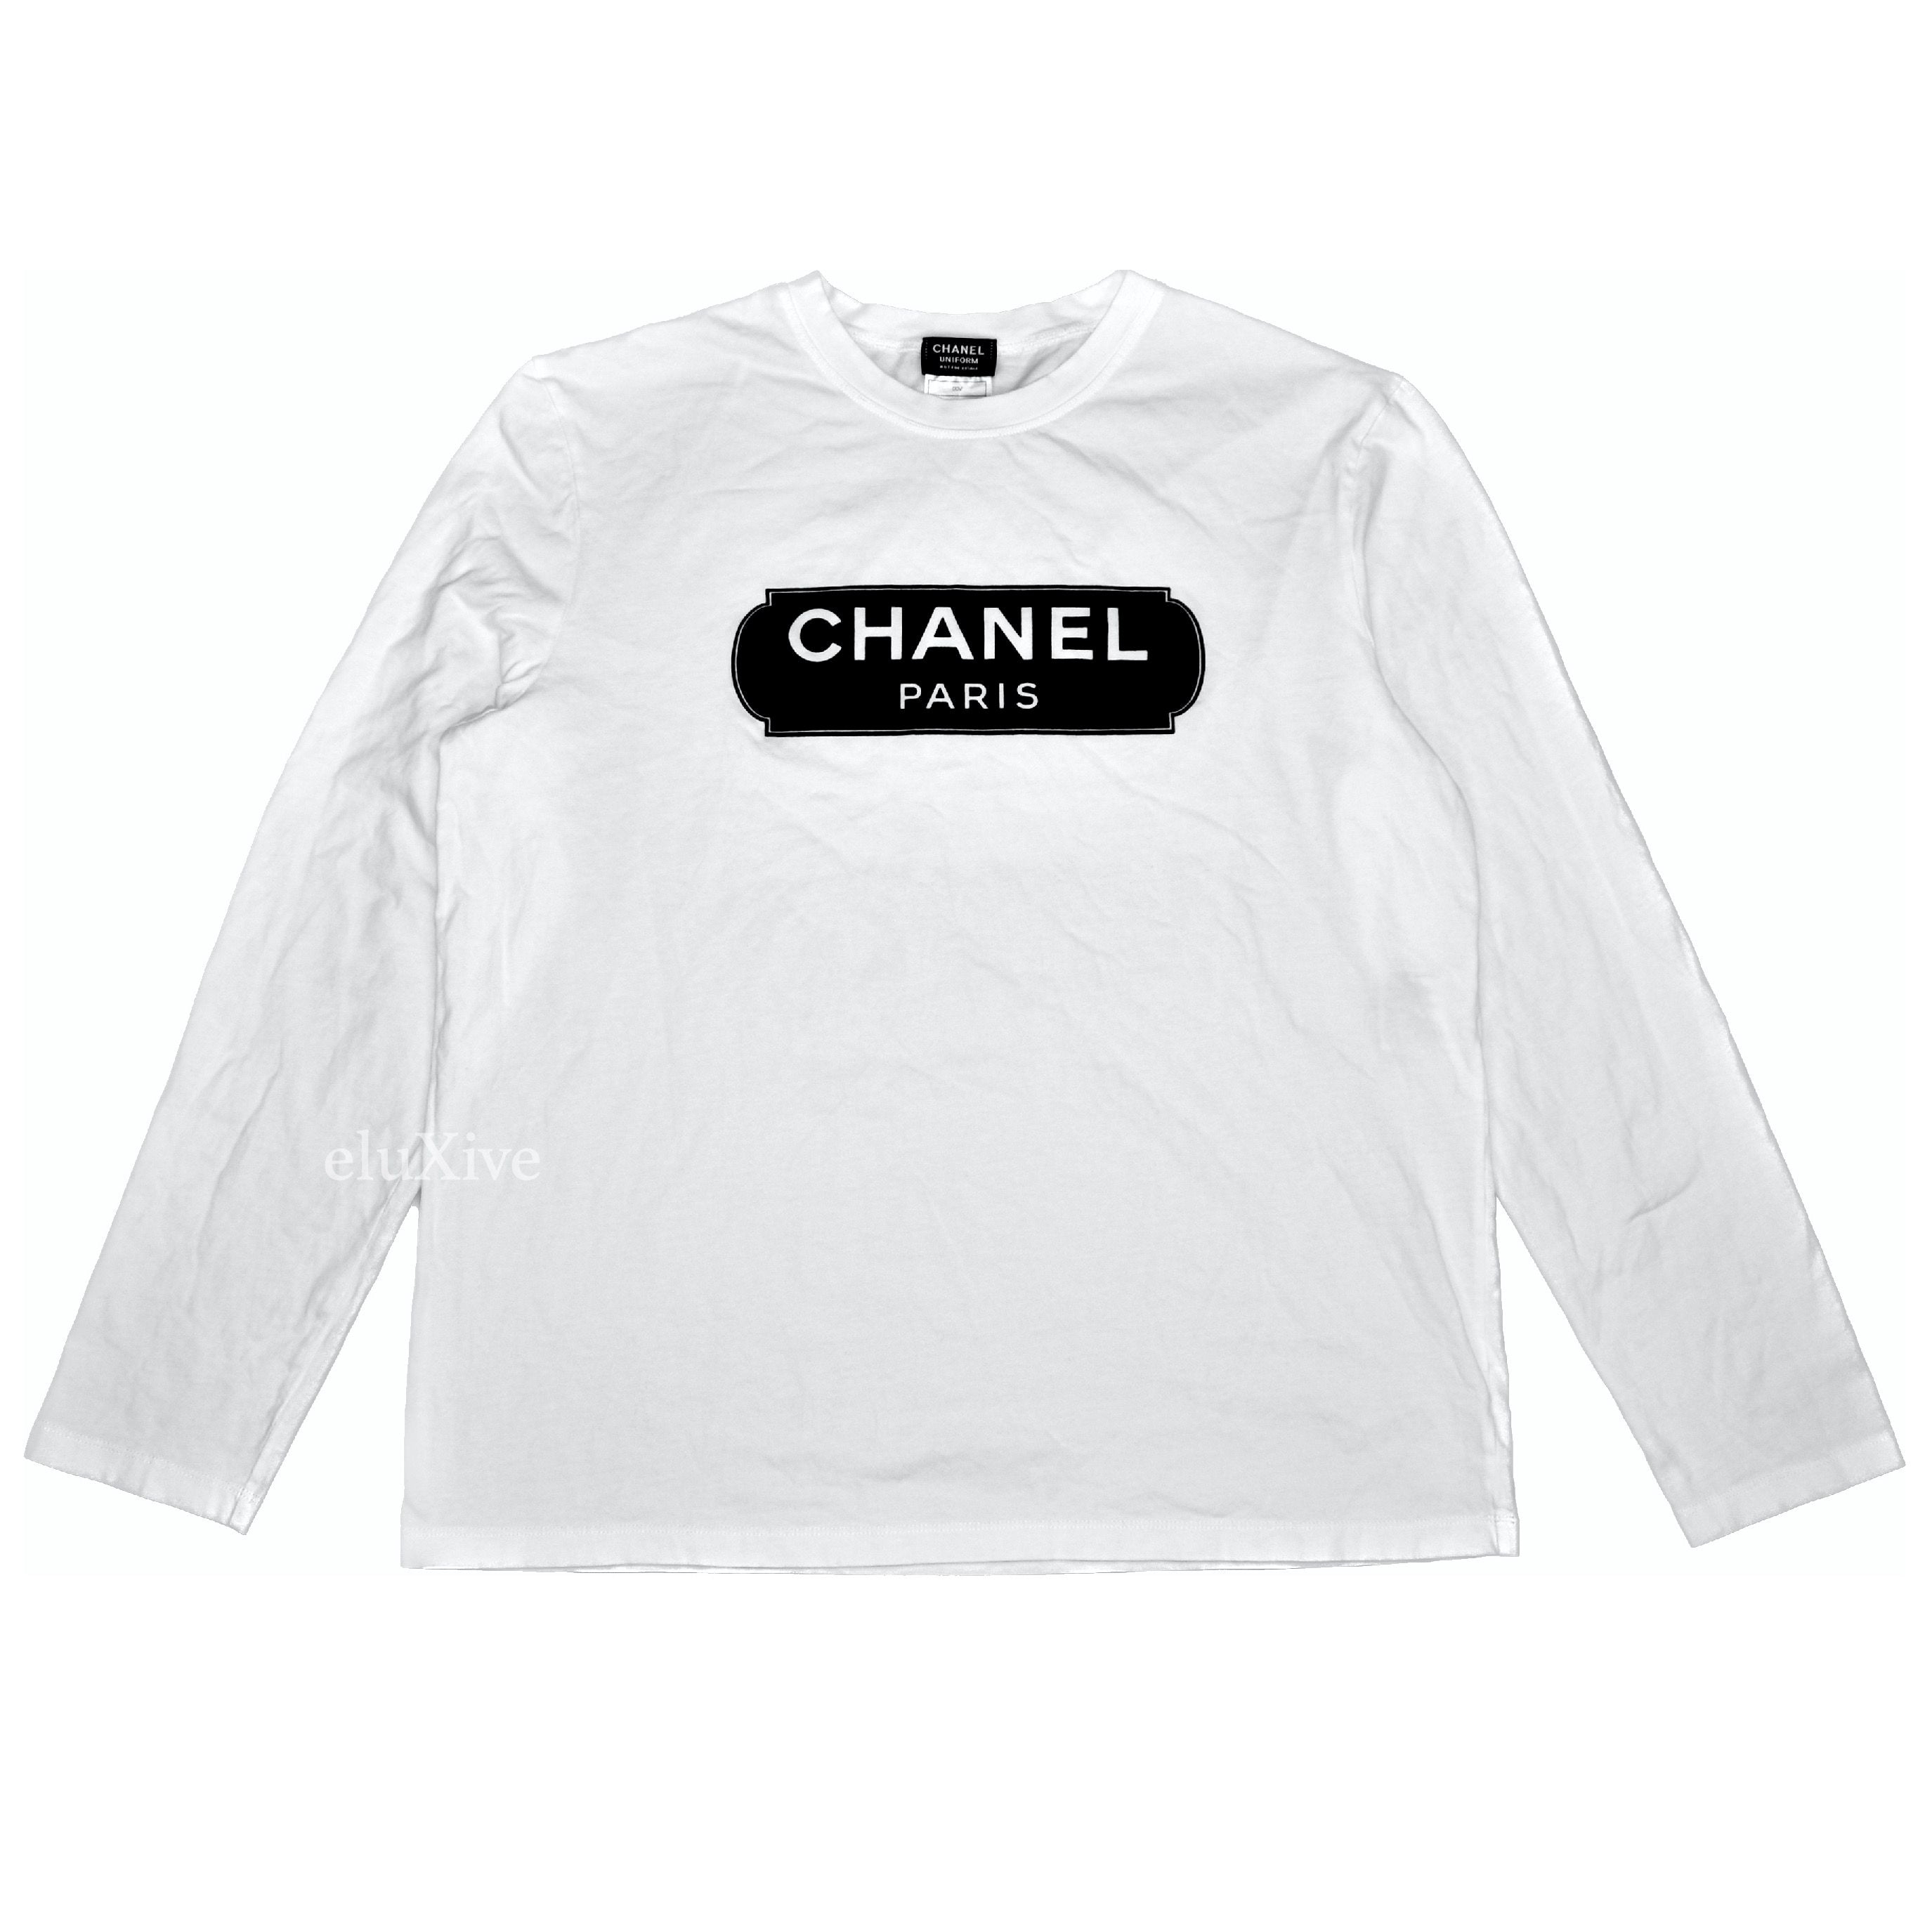 Chanel Tee Shirt 